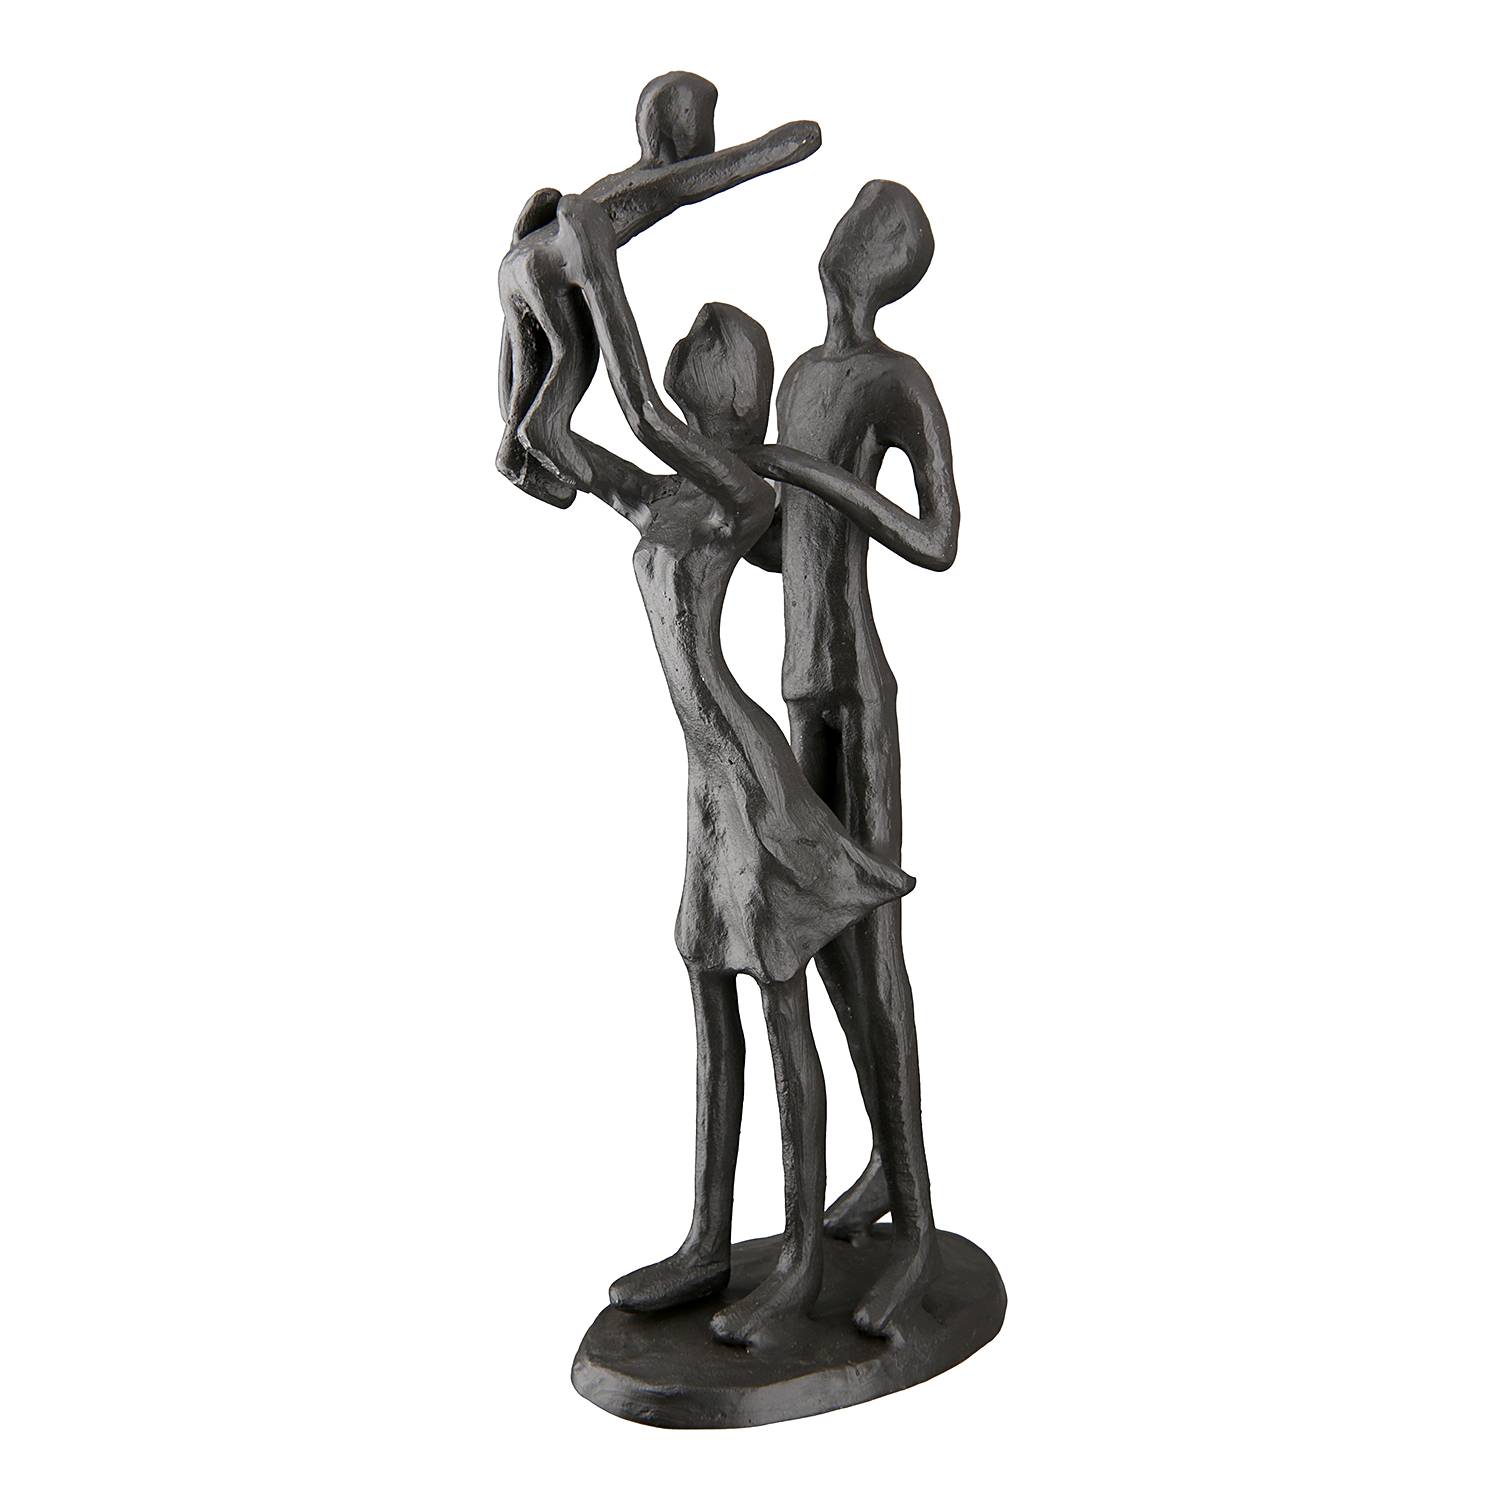 Skulptur Familienglück kaufen | home24